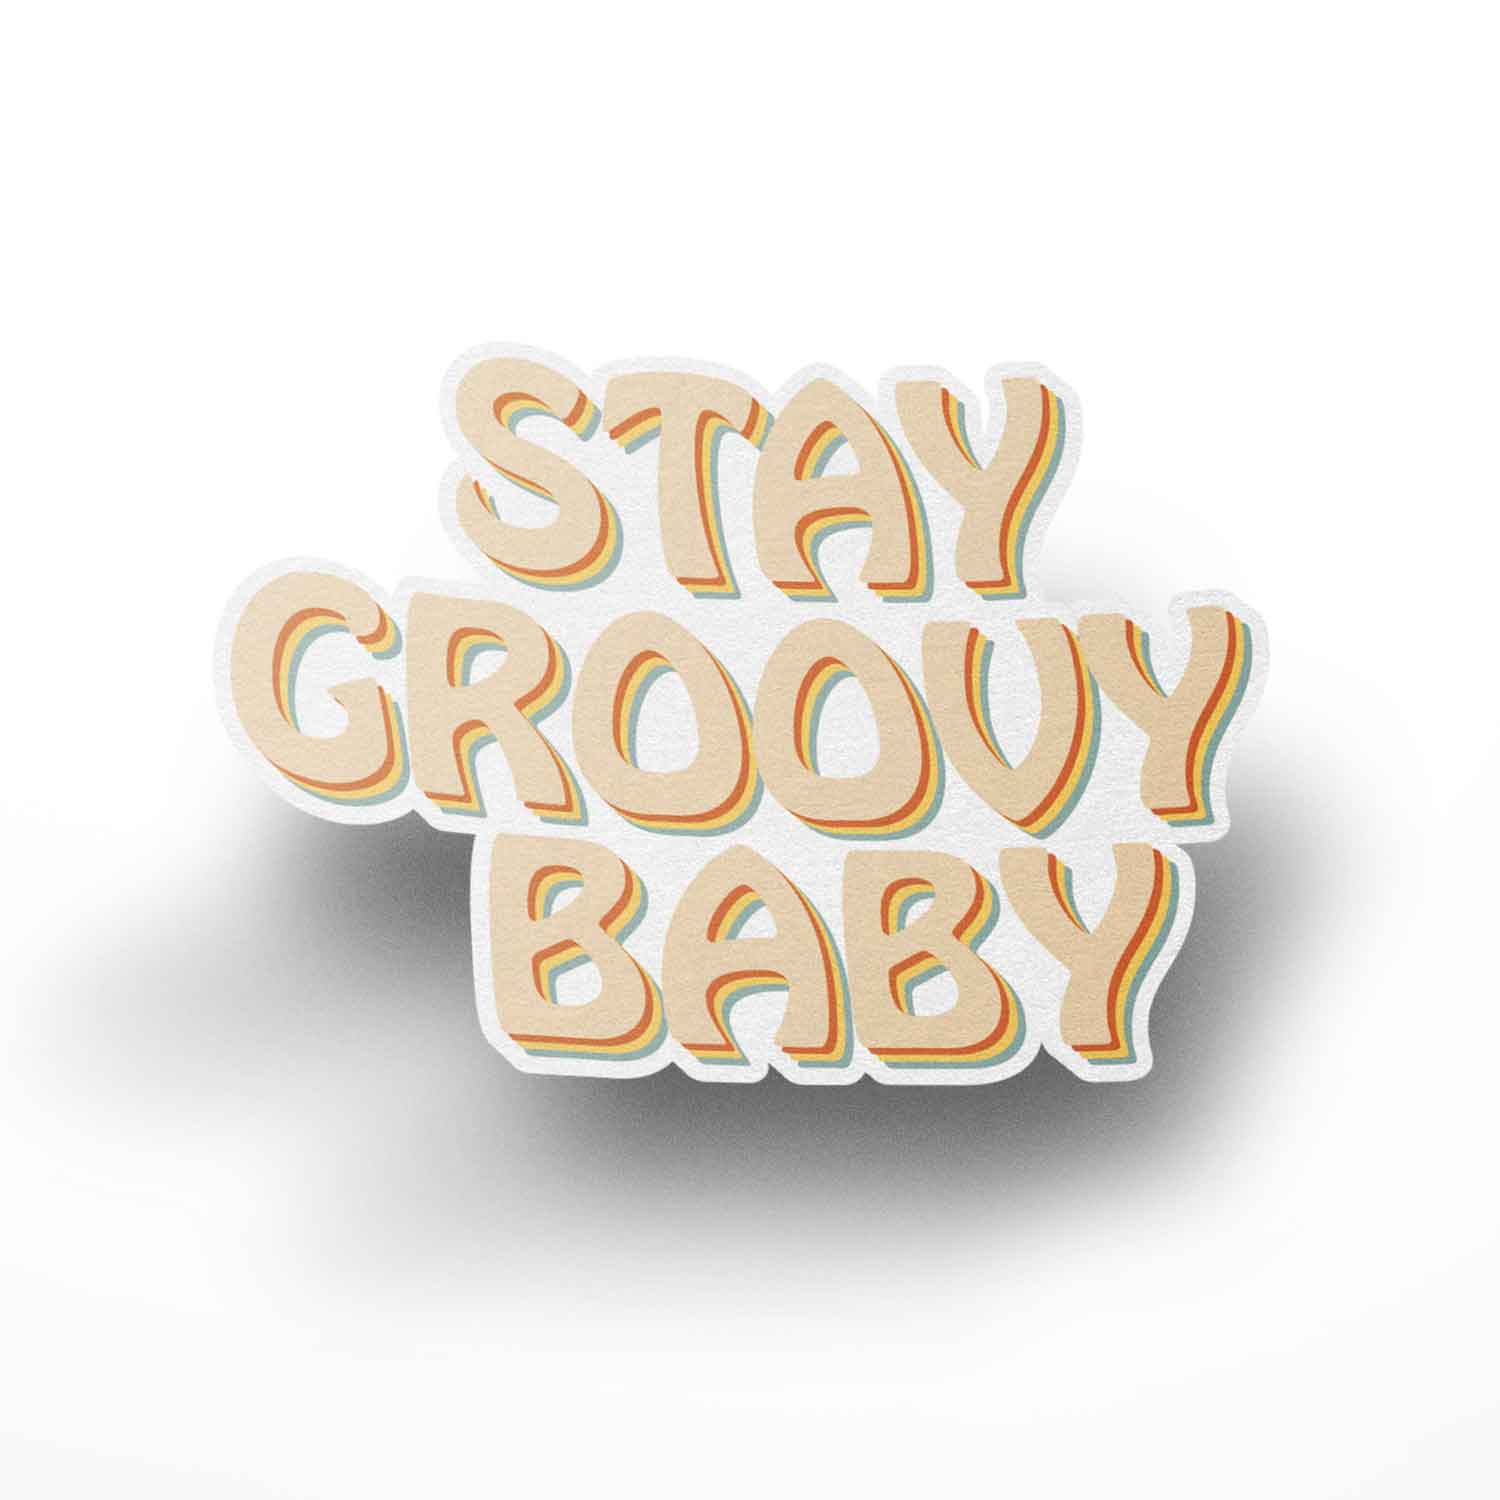 Stay Groovy Baby Sticker